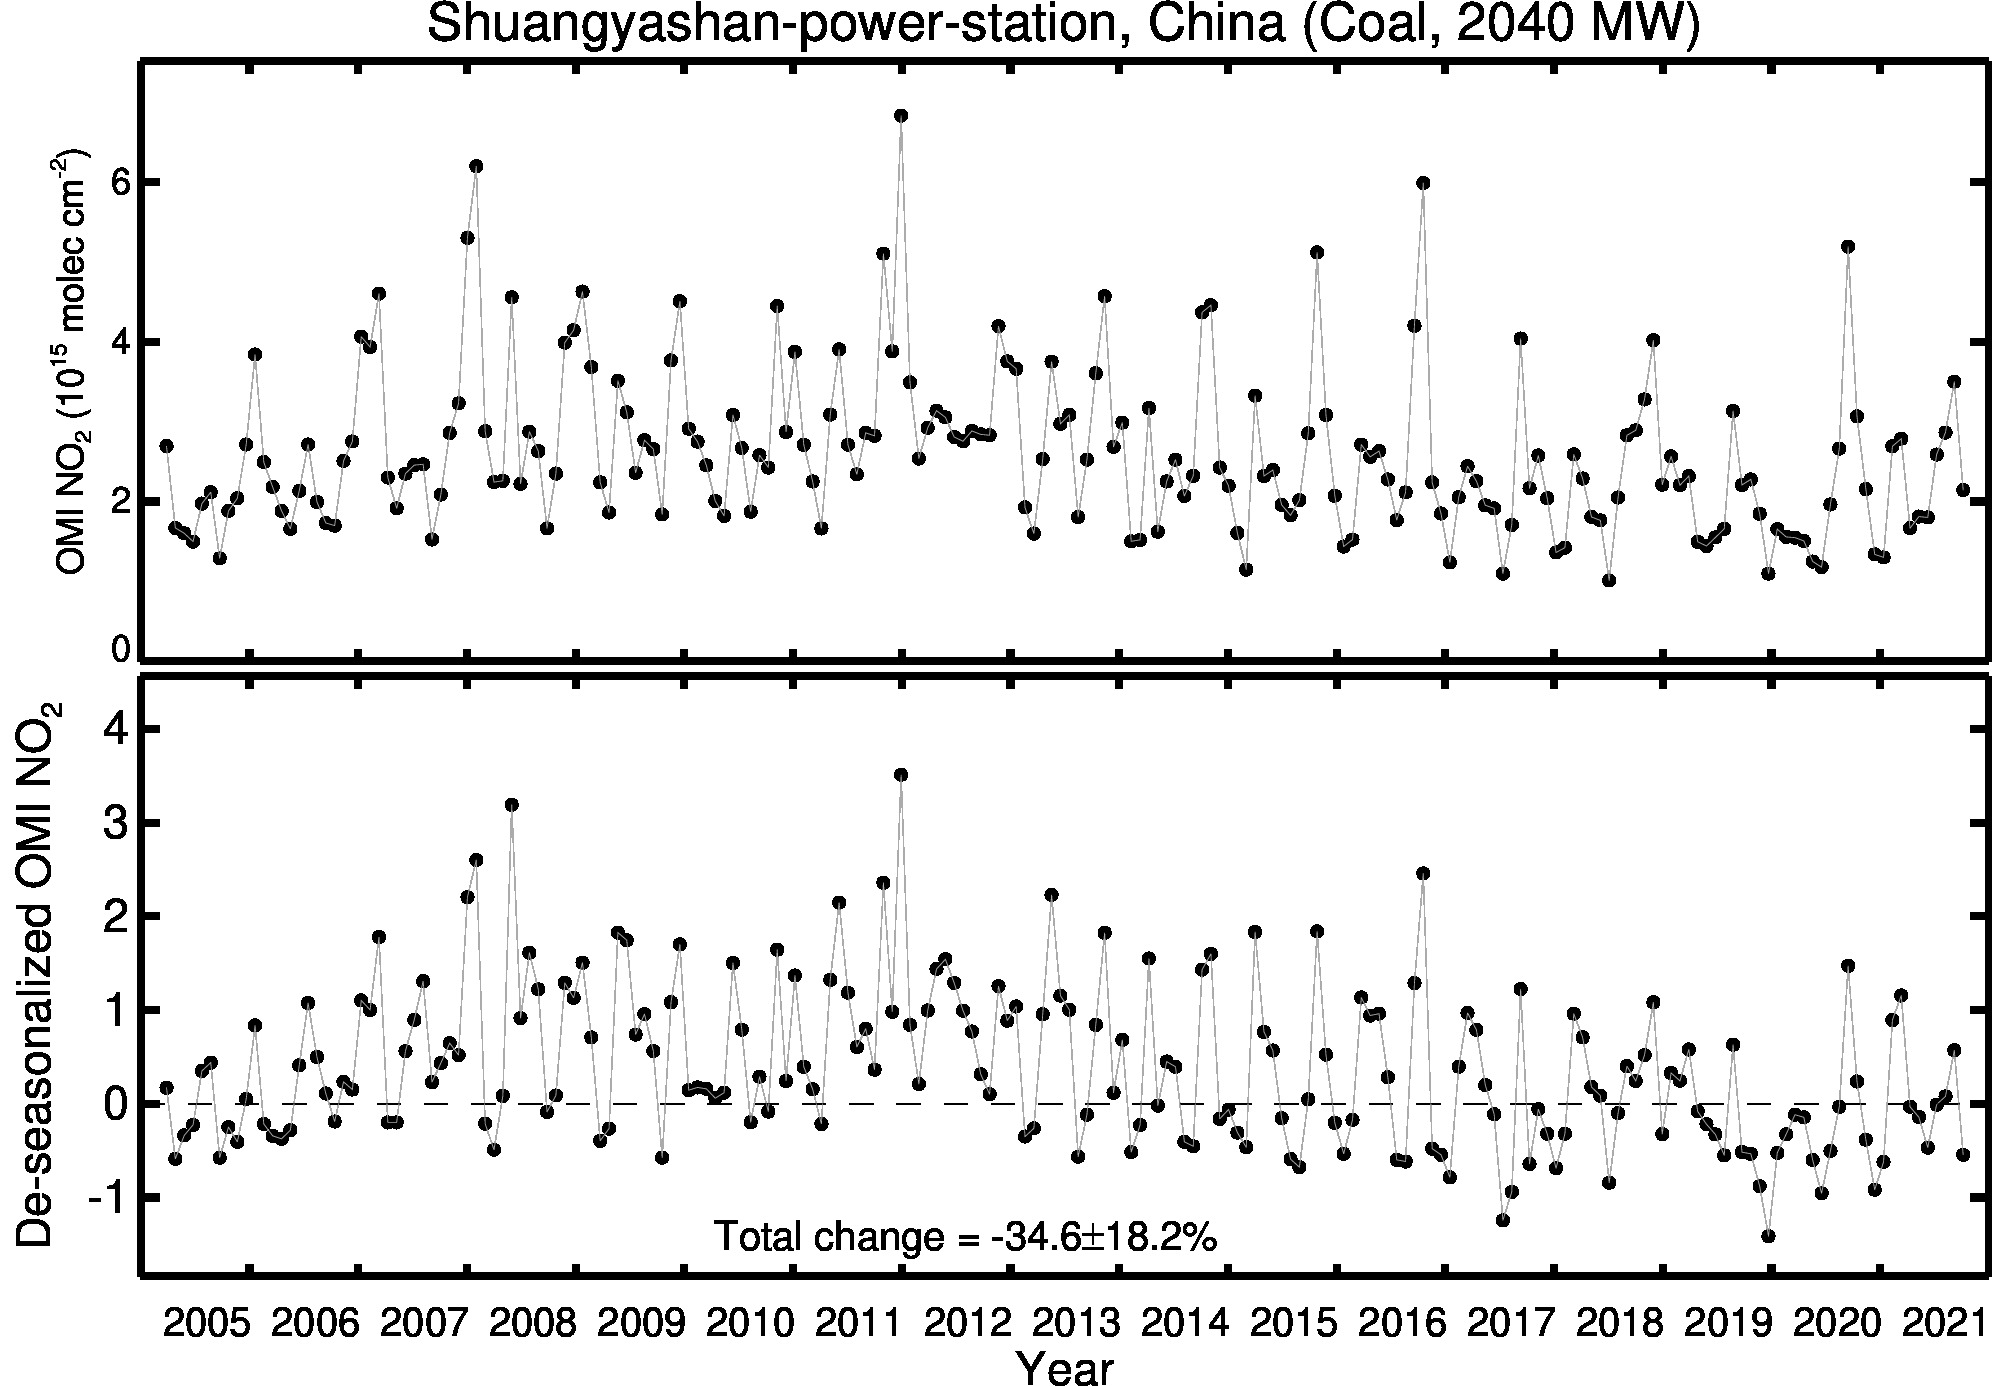 Shuangyashan power station Line Plot 2005-2021